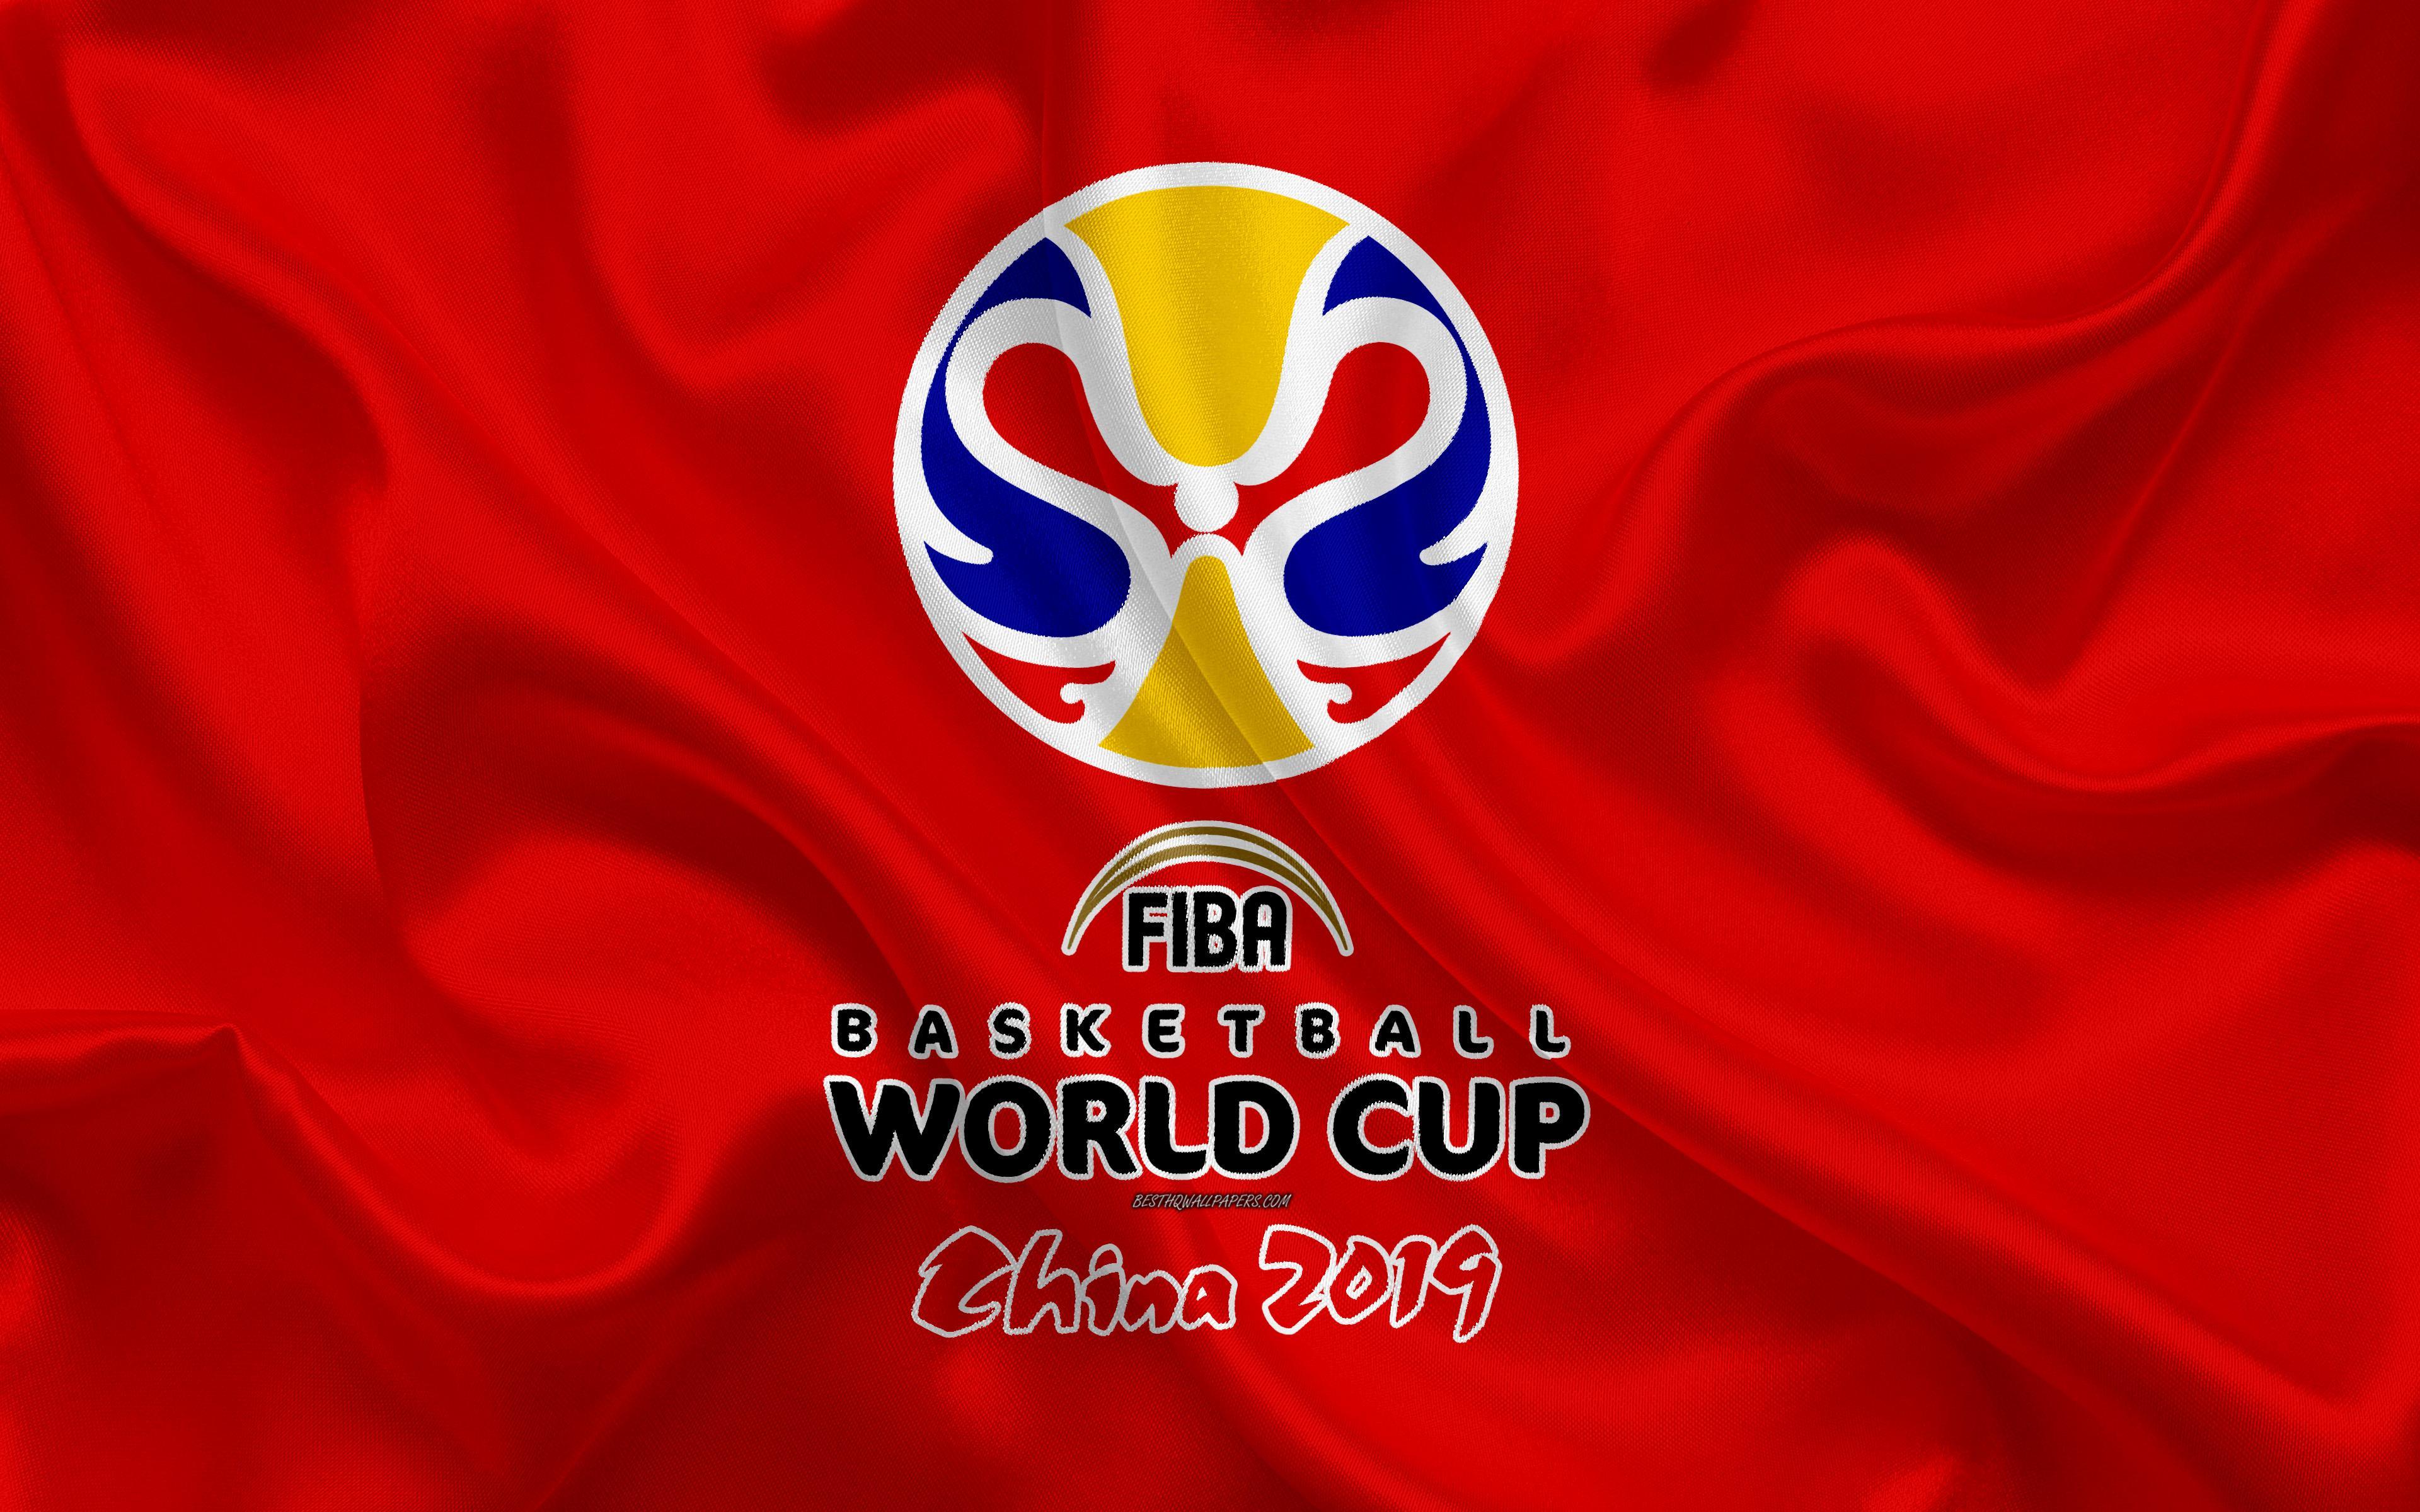 FIBA Basketball World Cup Wallpapers Wallpaper Cave